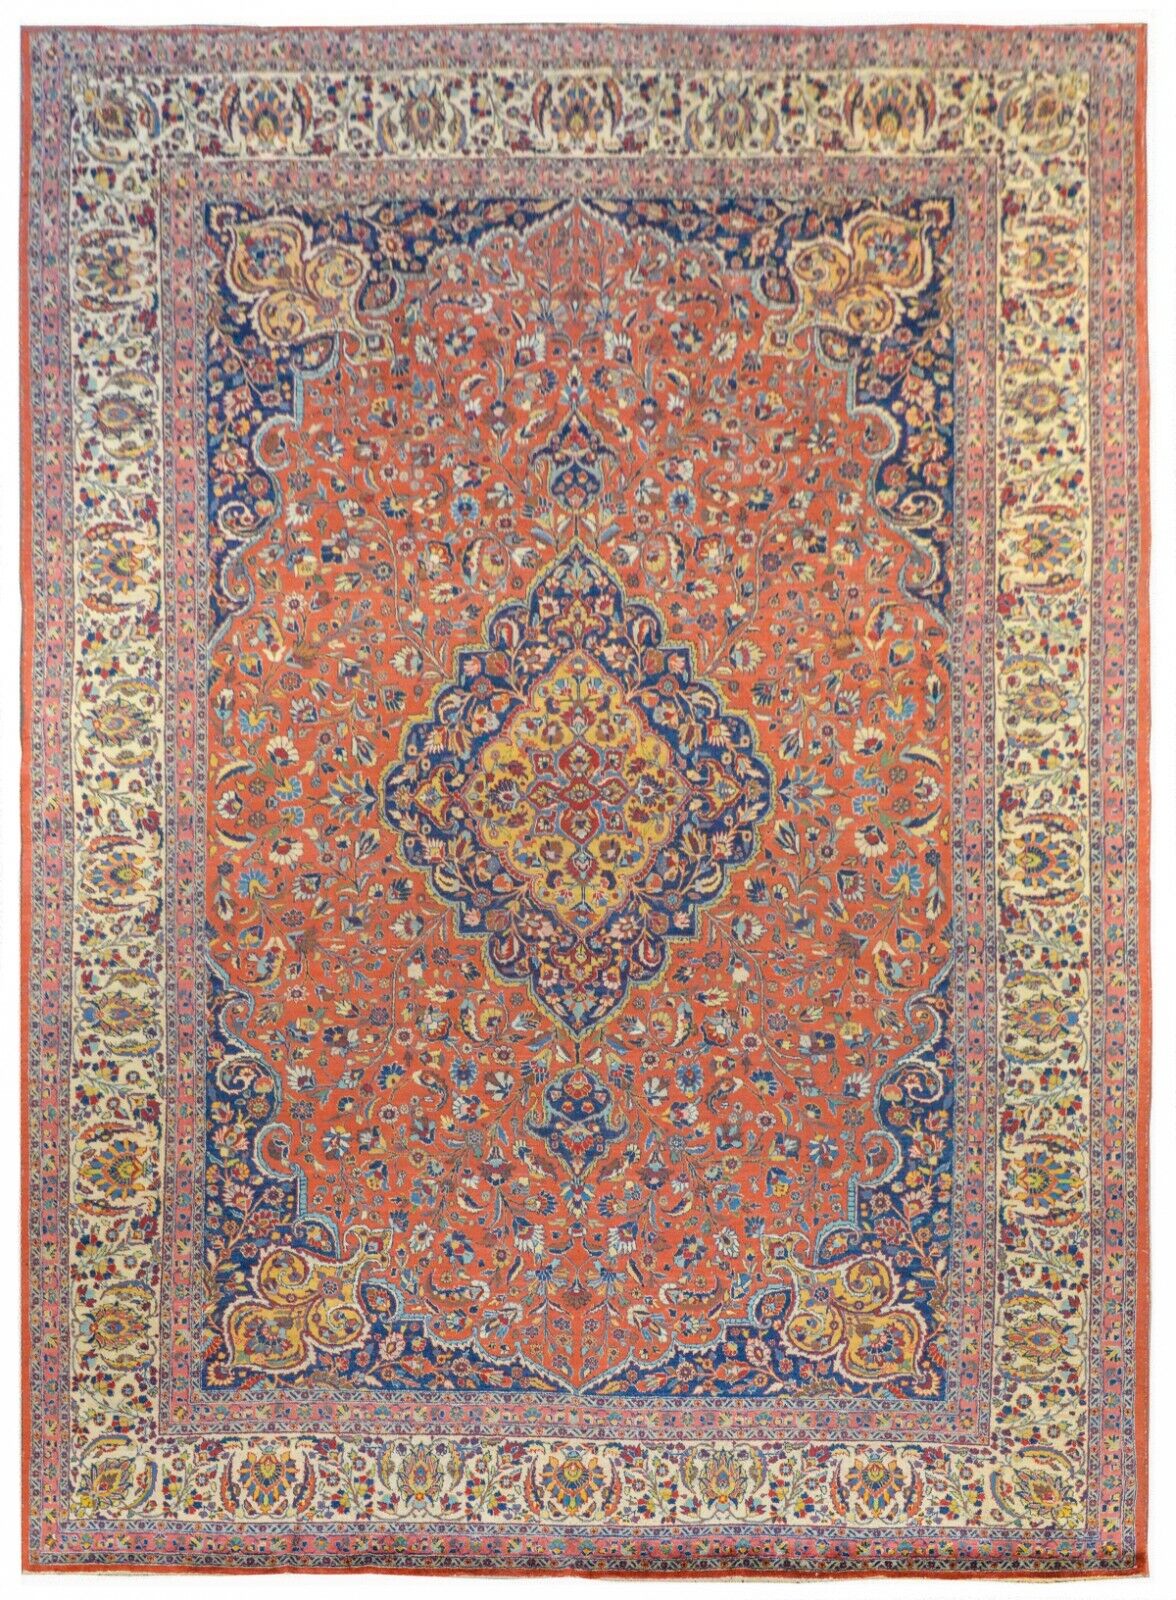 Fantastic Floral - 1930s Antique Oriental Rug - Handmade Carpet - 11.4 x 15.5 ft